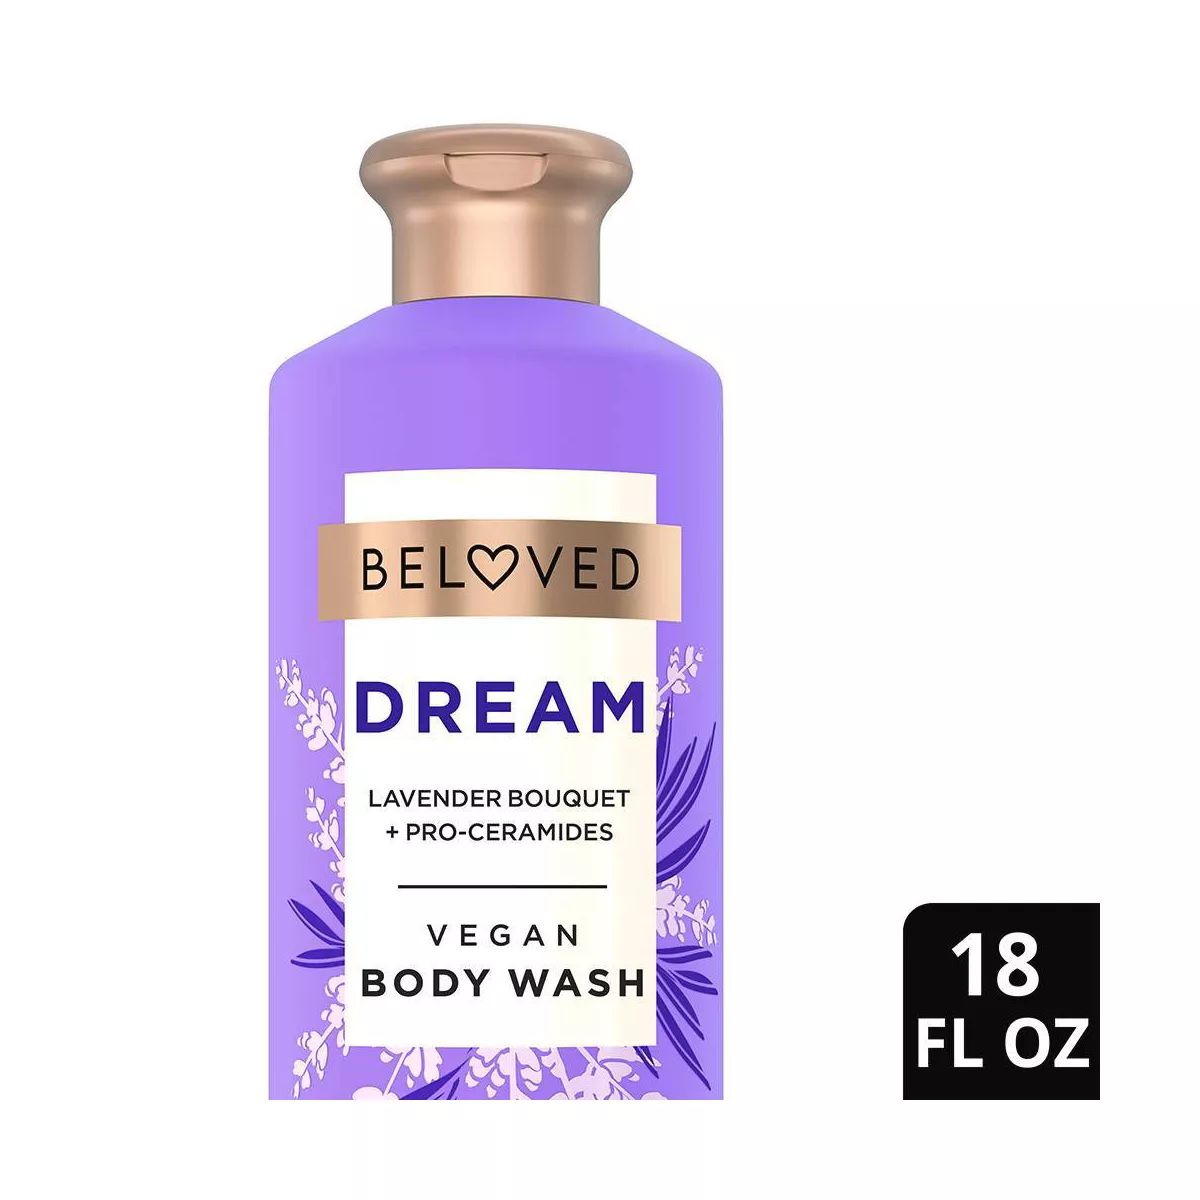 Beloved Dream Vegan Body Wash with Lavender Bouquet & Pro-Ceramides - 18 fl oz | Target